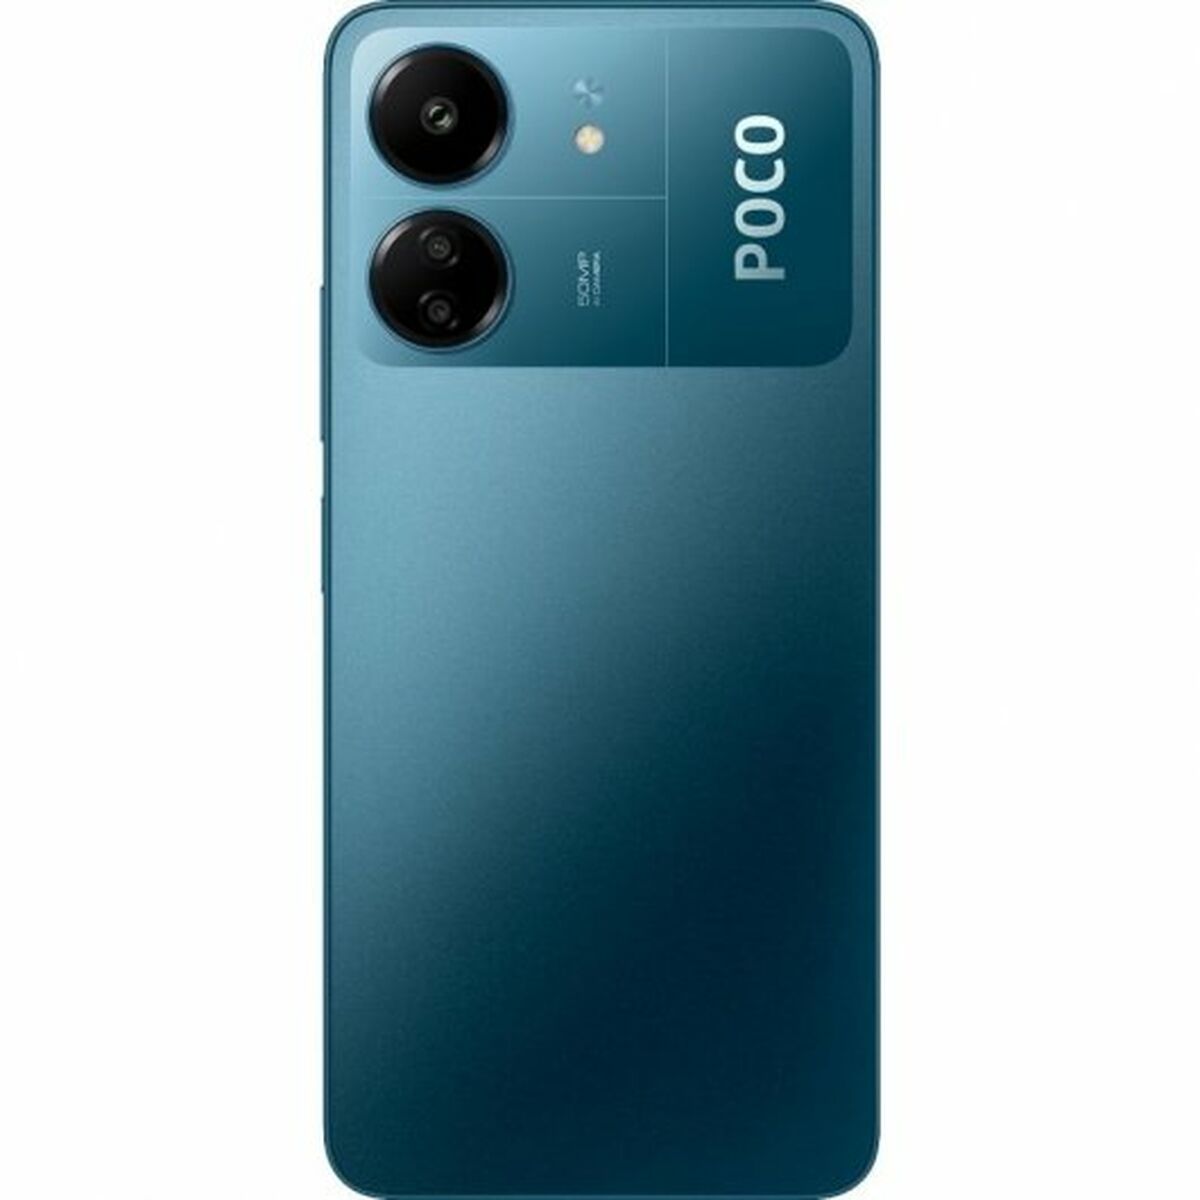 Smartphone Xiaomi Poco C65 MediaTek Helio G85 8 GB RAM 256 GB Blau - CA International  